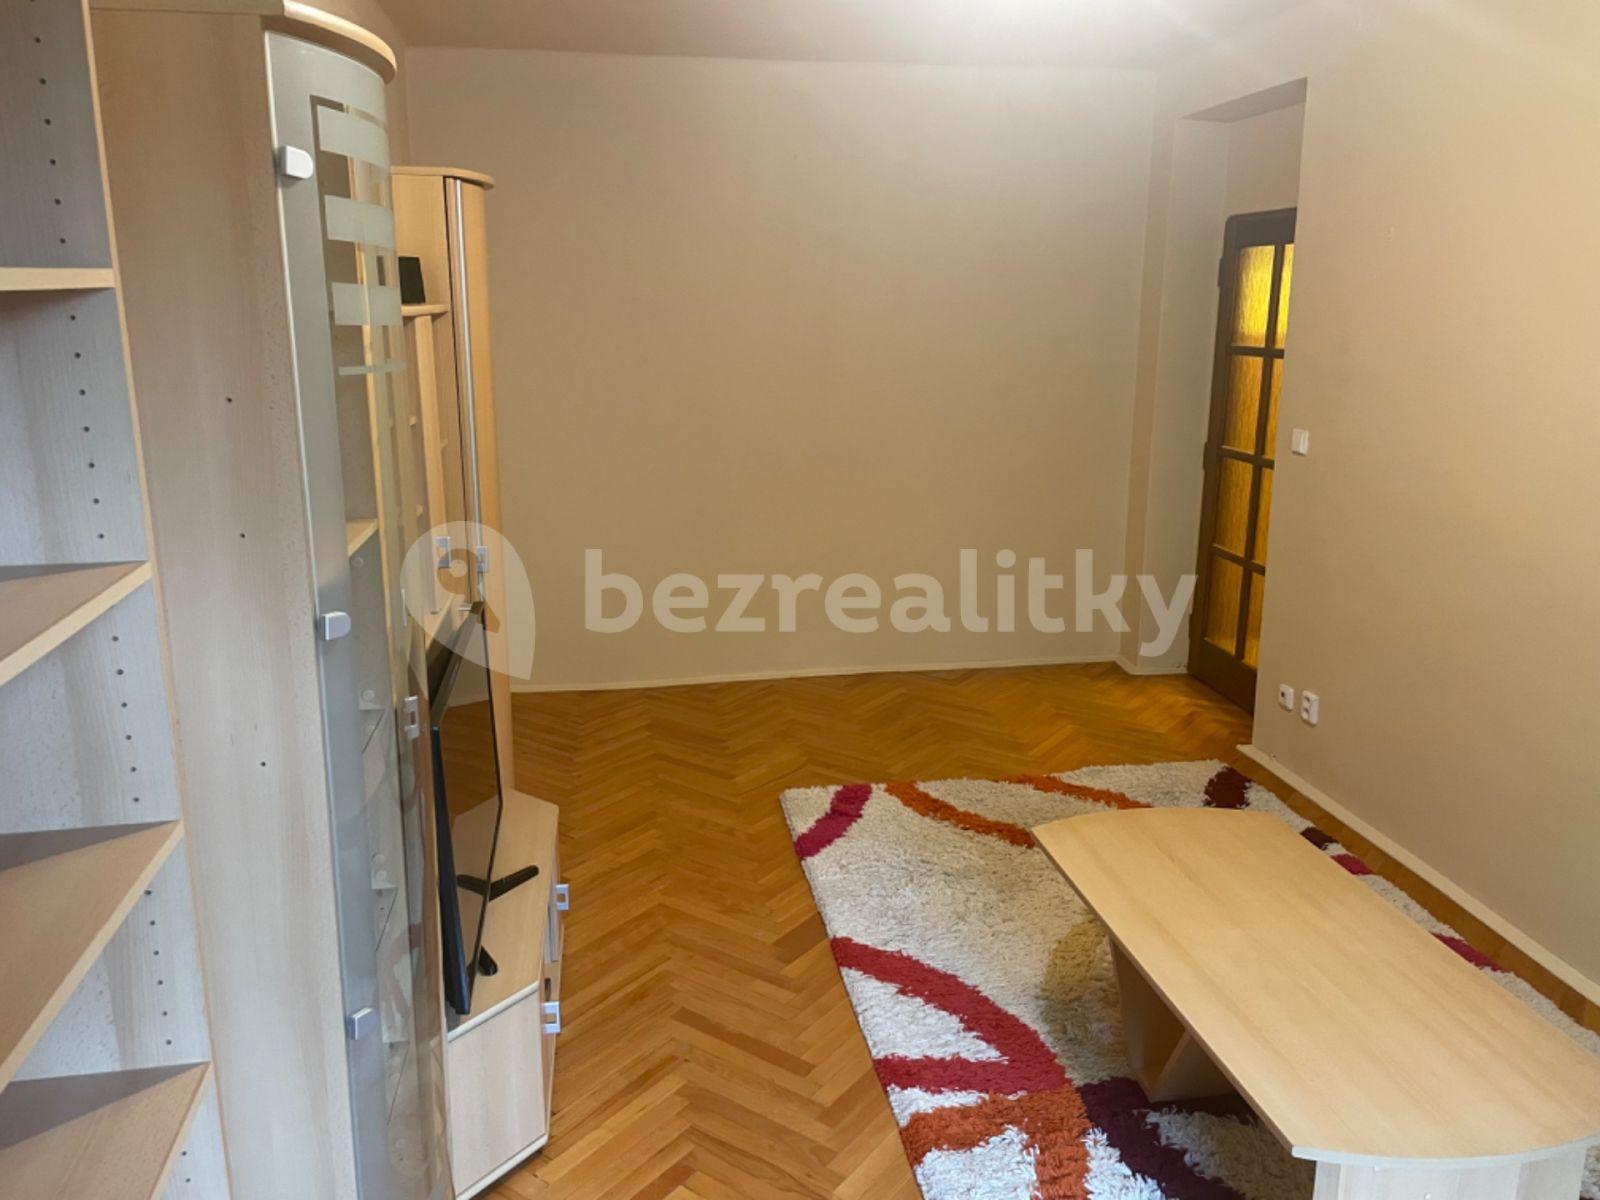 2 bedroom flat for sale, 56 m², Dvouletky, Prague, Prague